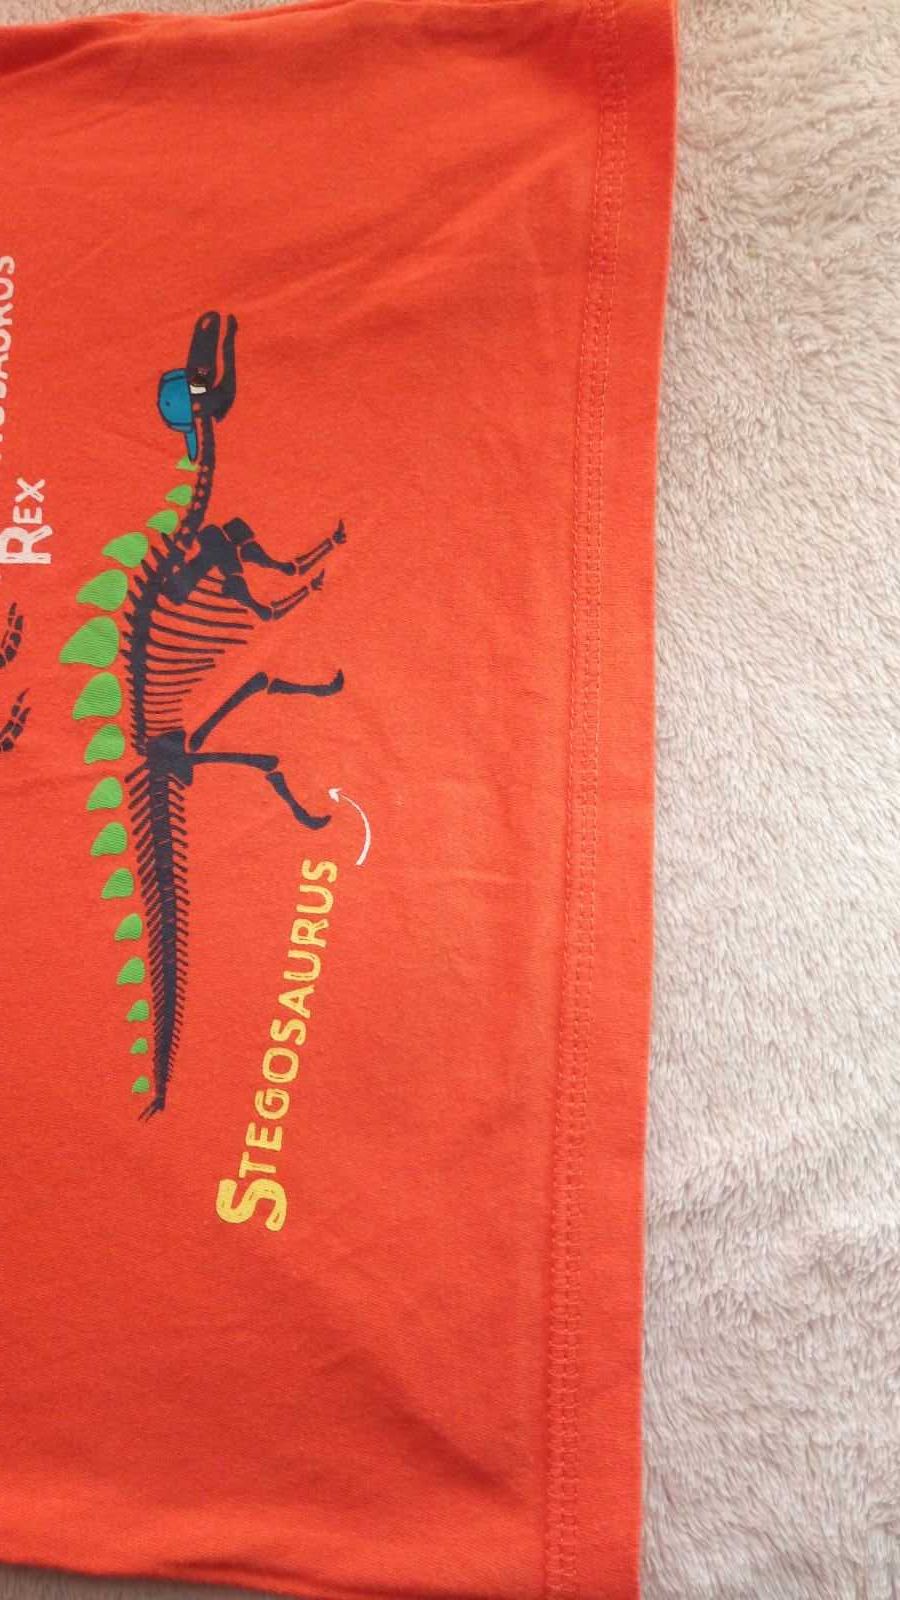 Оранжева футболка для хлопчика  Dopo 128, 7-8 р, динозаври